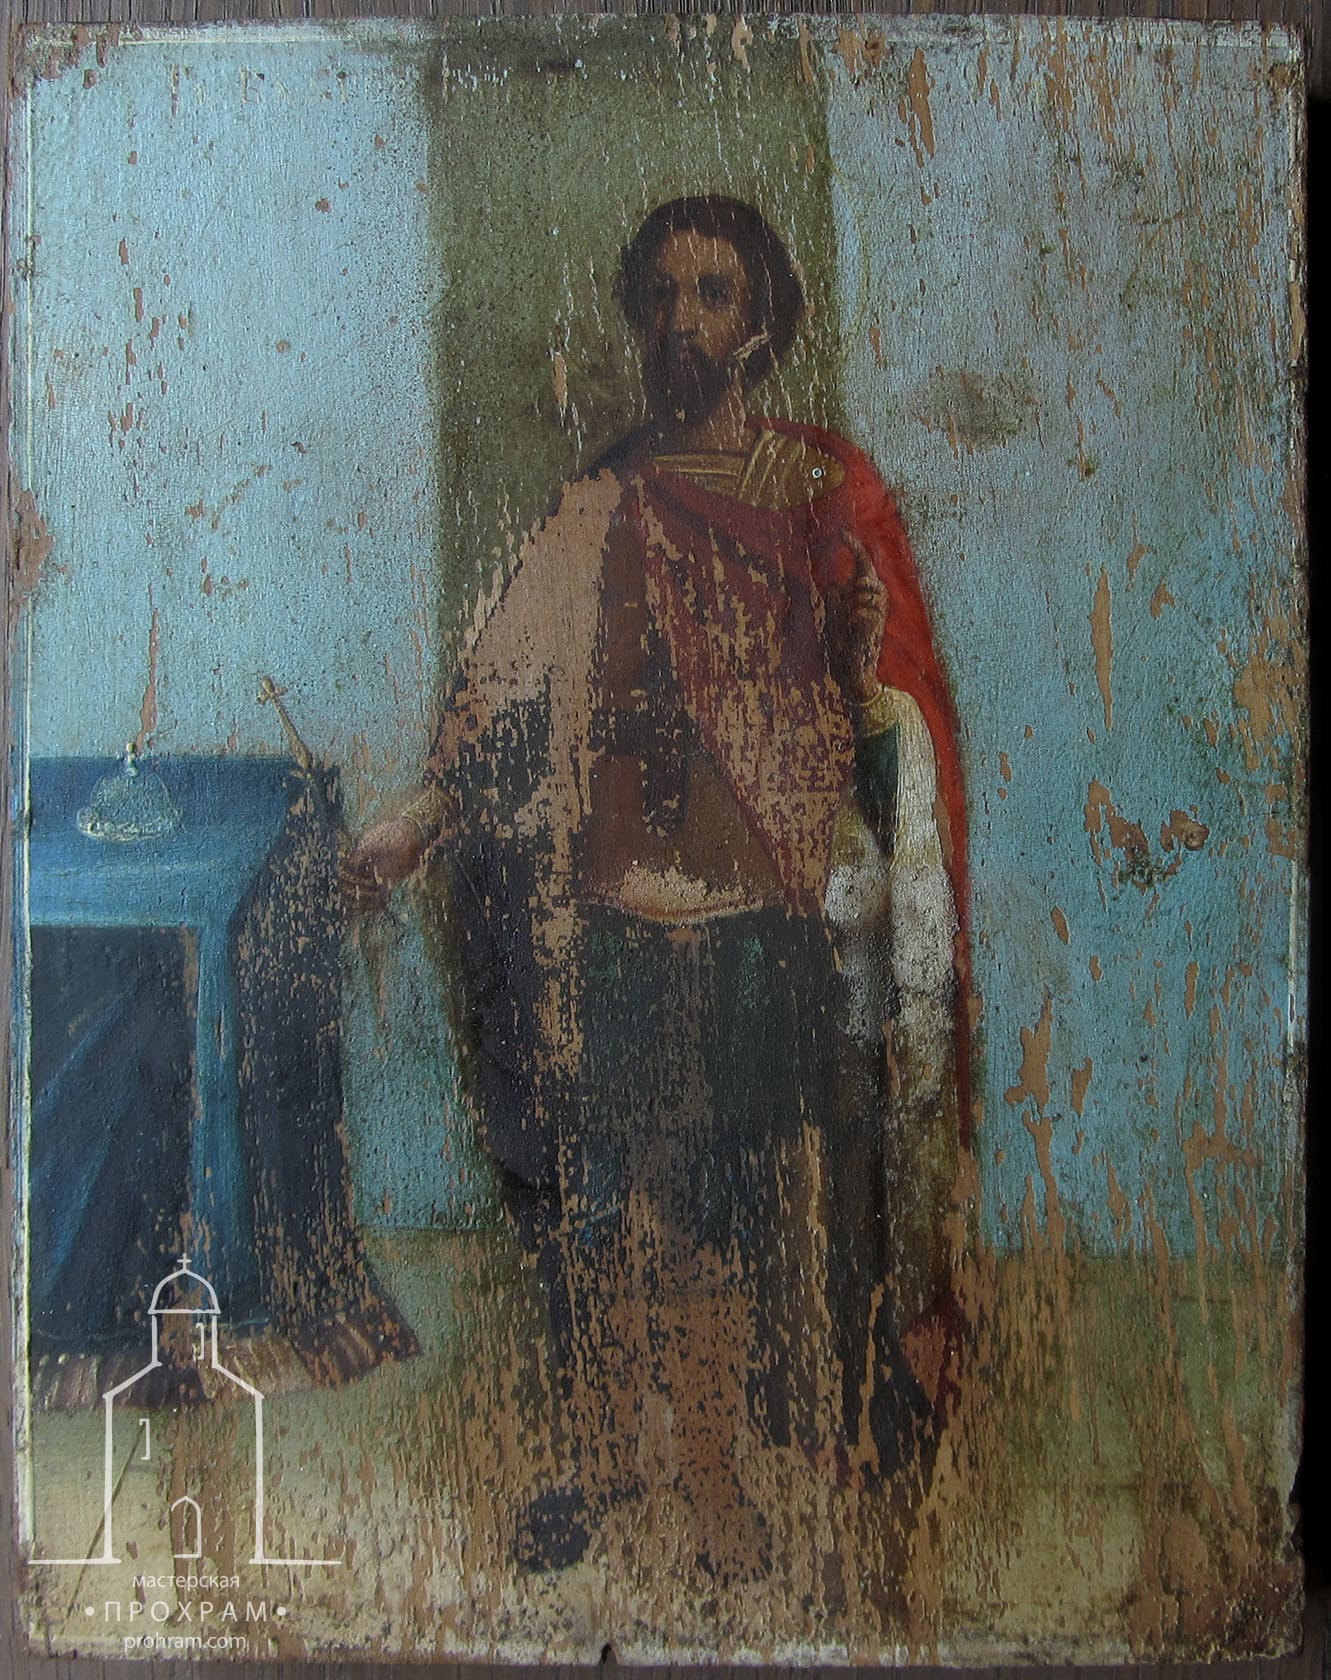 Реставрация, Св. Александр Невский, реставрация икон, реставрация икон этапы, реставрация иконы фото до и после